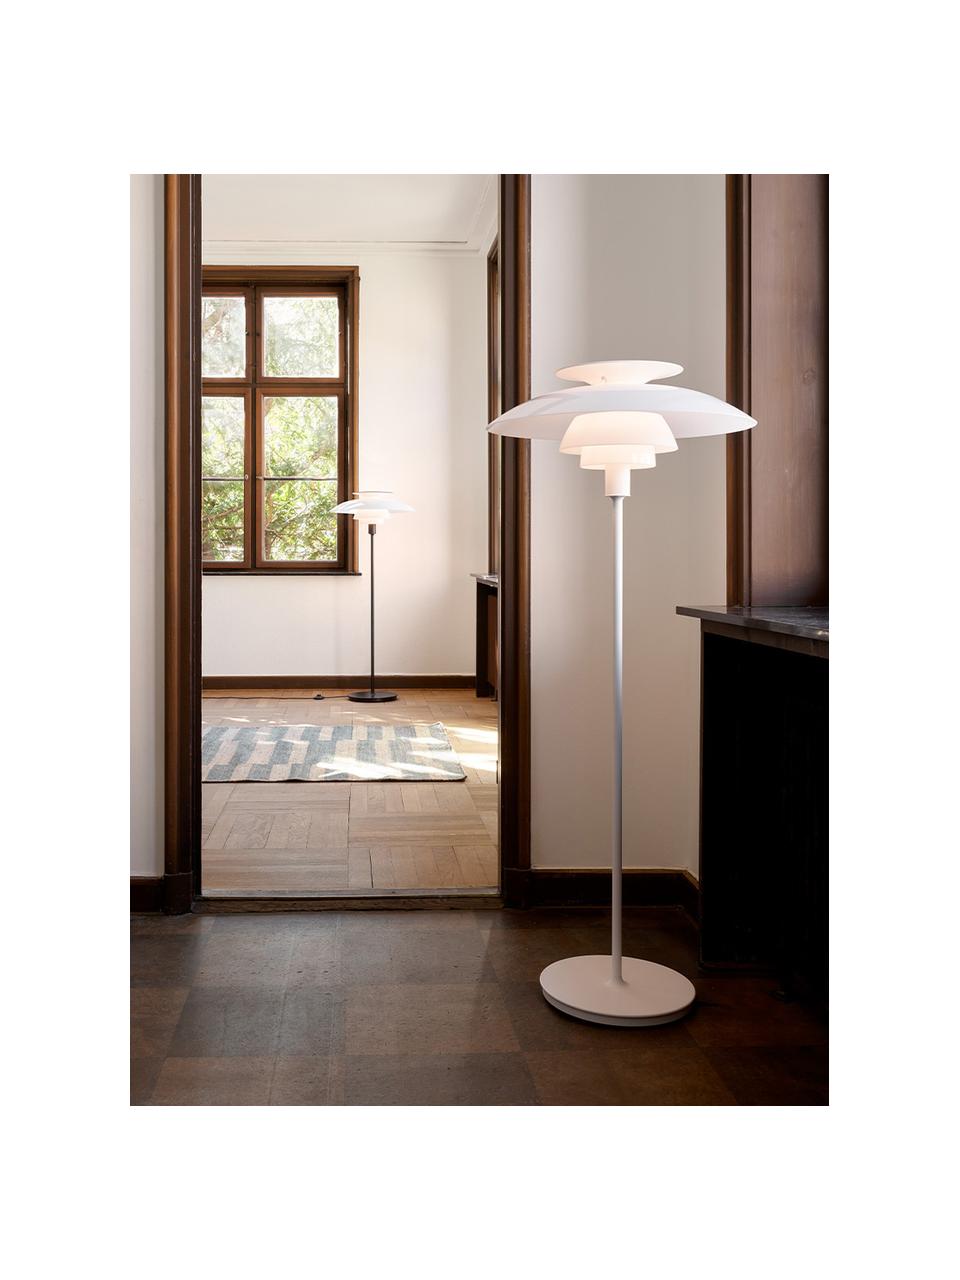 Kleine dimbare vloerlamp PH 80, Lampenkap: acrylglas, polycarbonaat, Lampvoet: ABS, Wit, H 132 cm